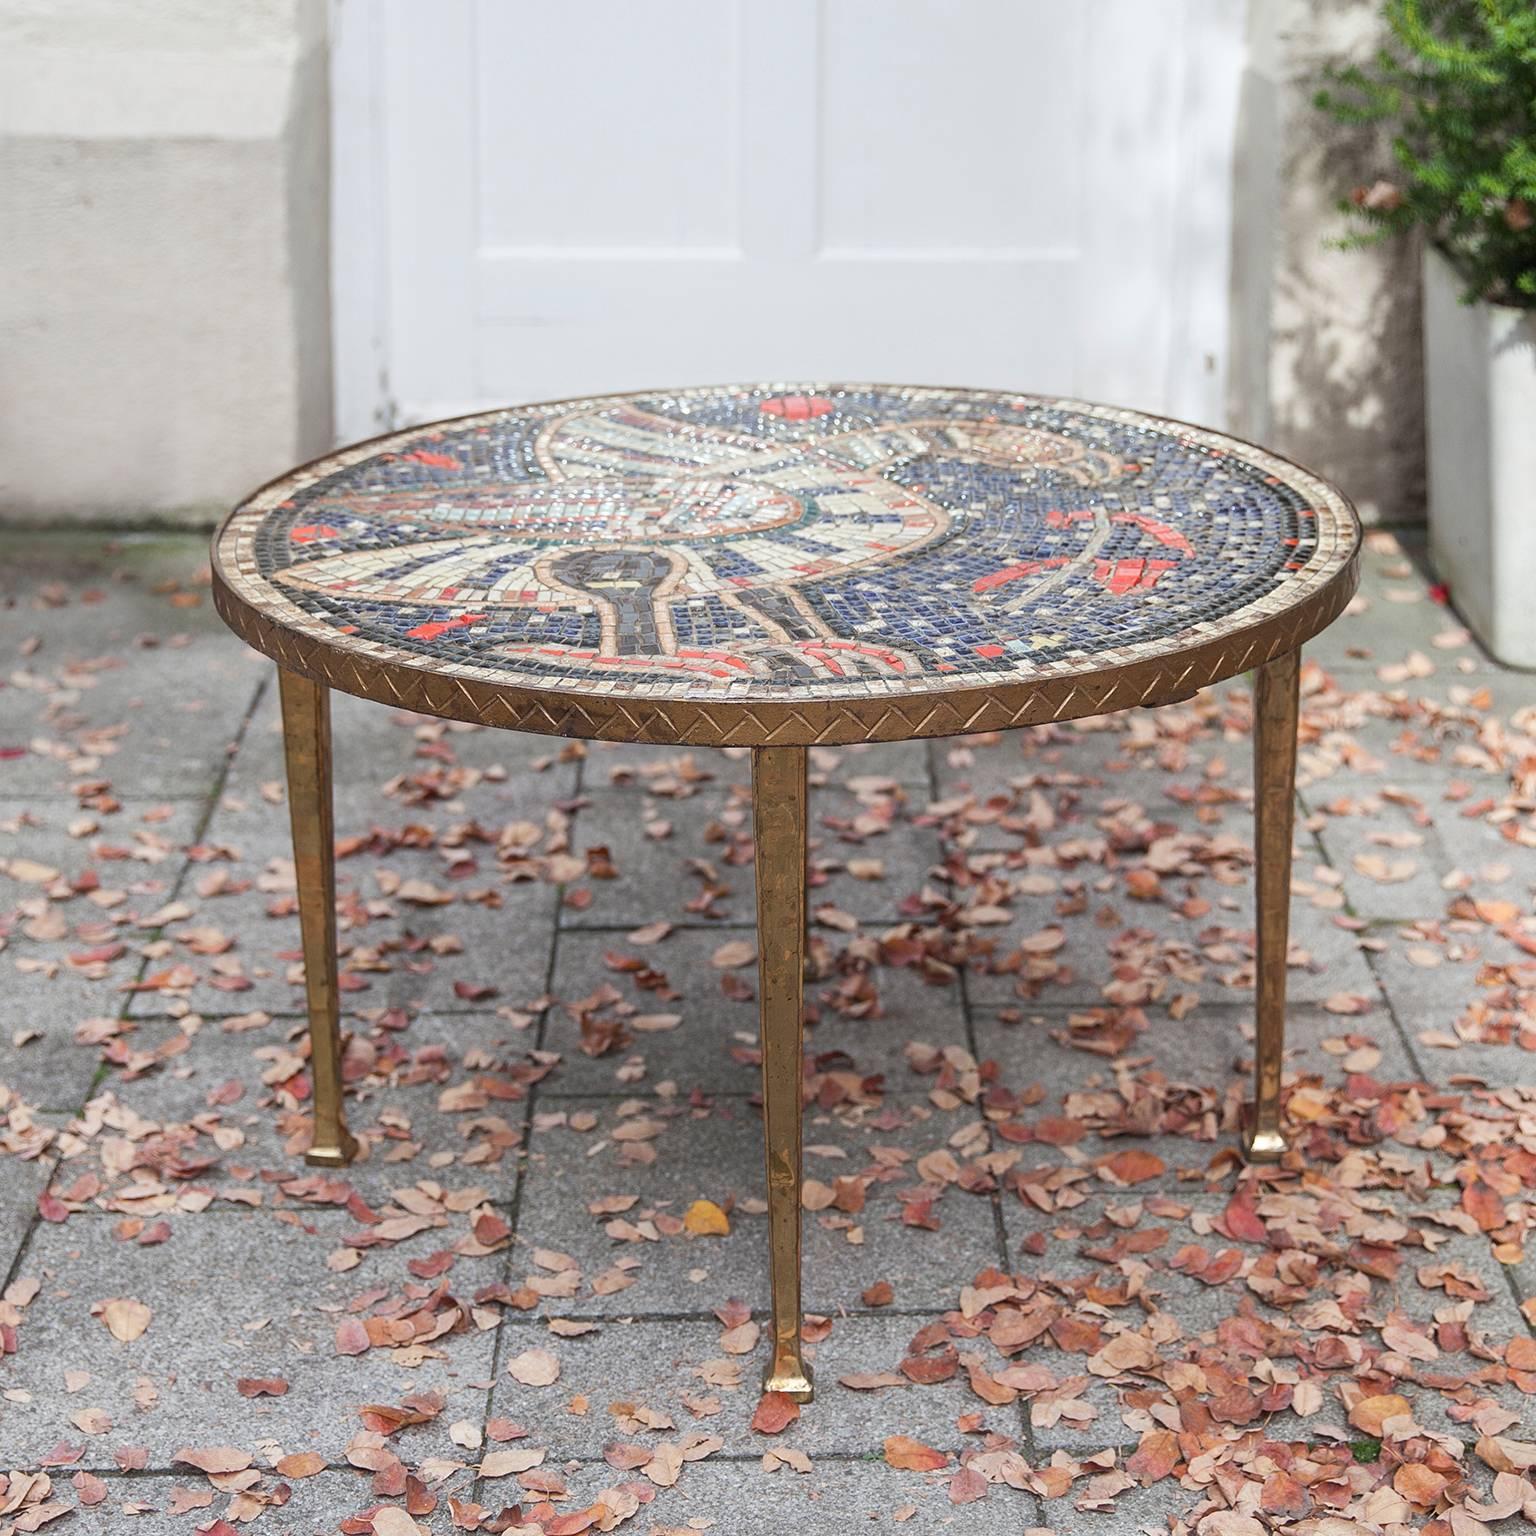 Wonderful Art Deco round mosaic table with golden bronze legs and a fantastic roman antic bird motif.
Measures: H 51 x D 81 cm.